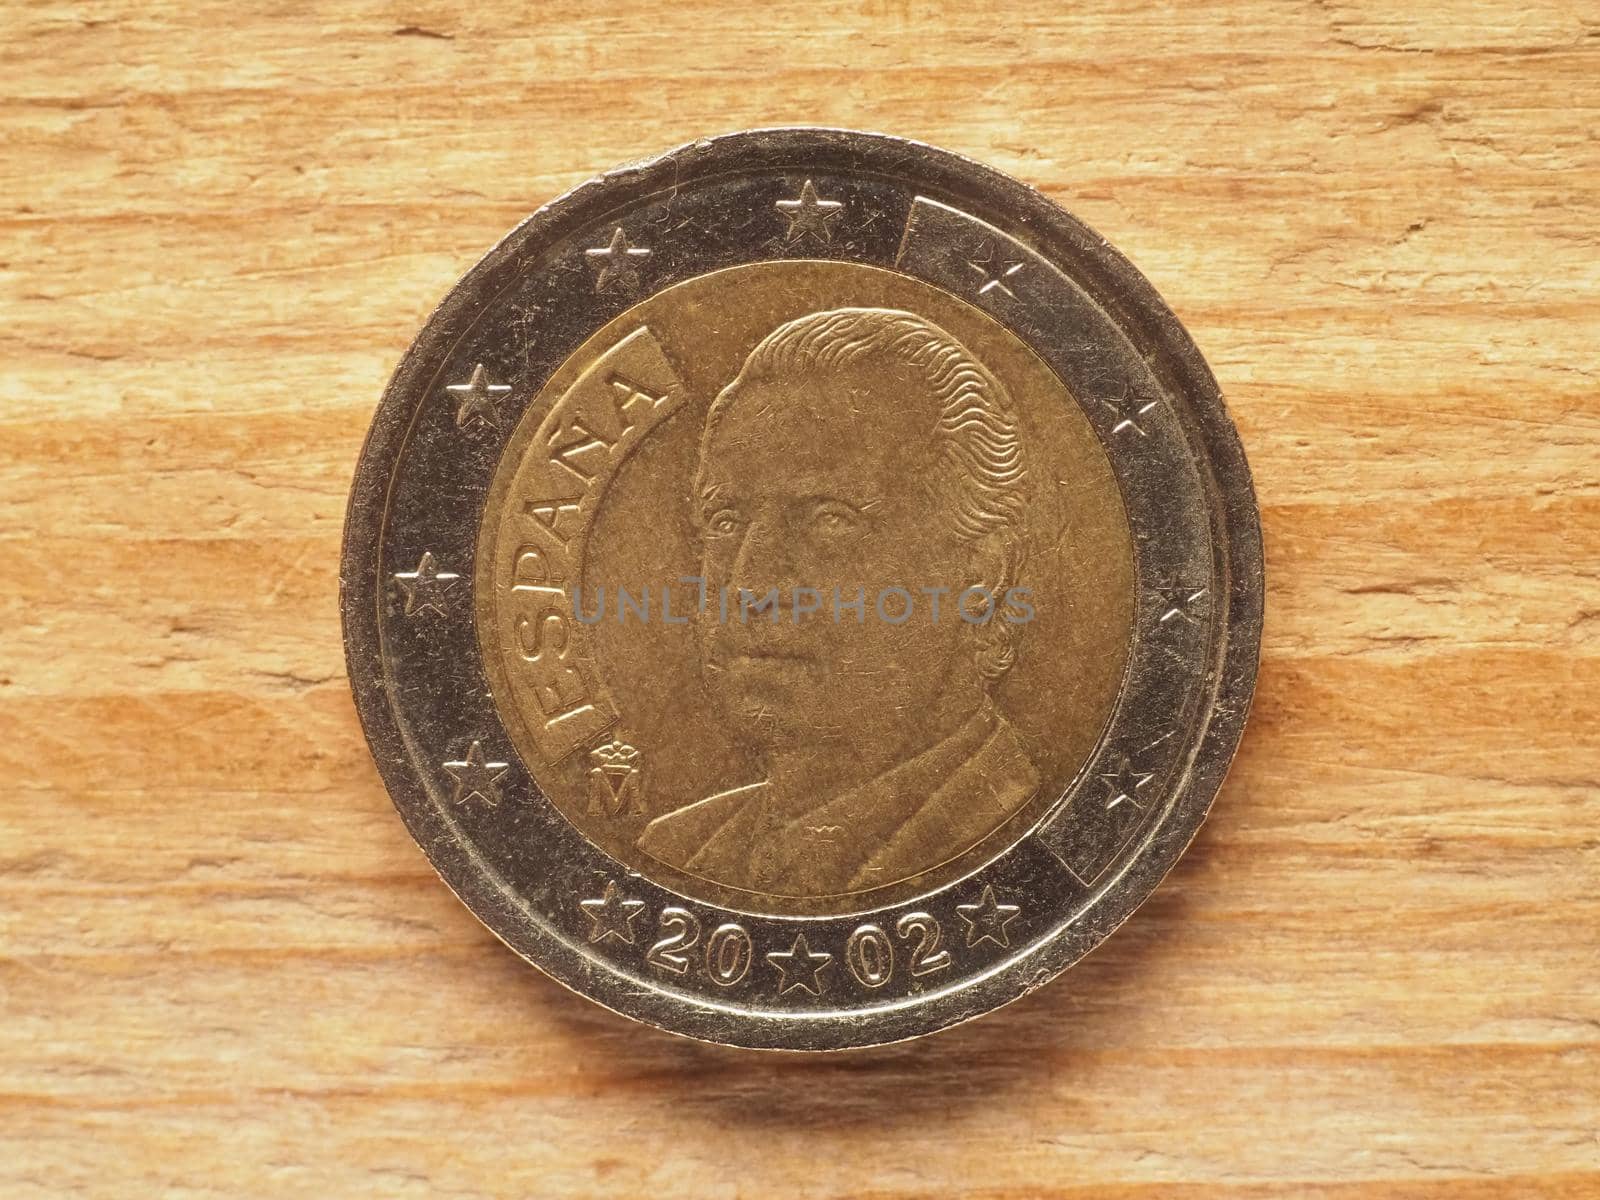 2 Euro coin showing king Juan Carlos I, currency of Spain, EU by claudiodivizia